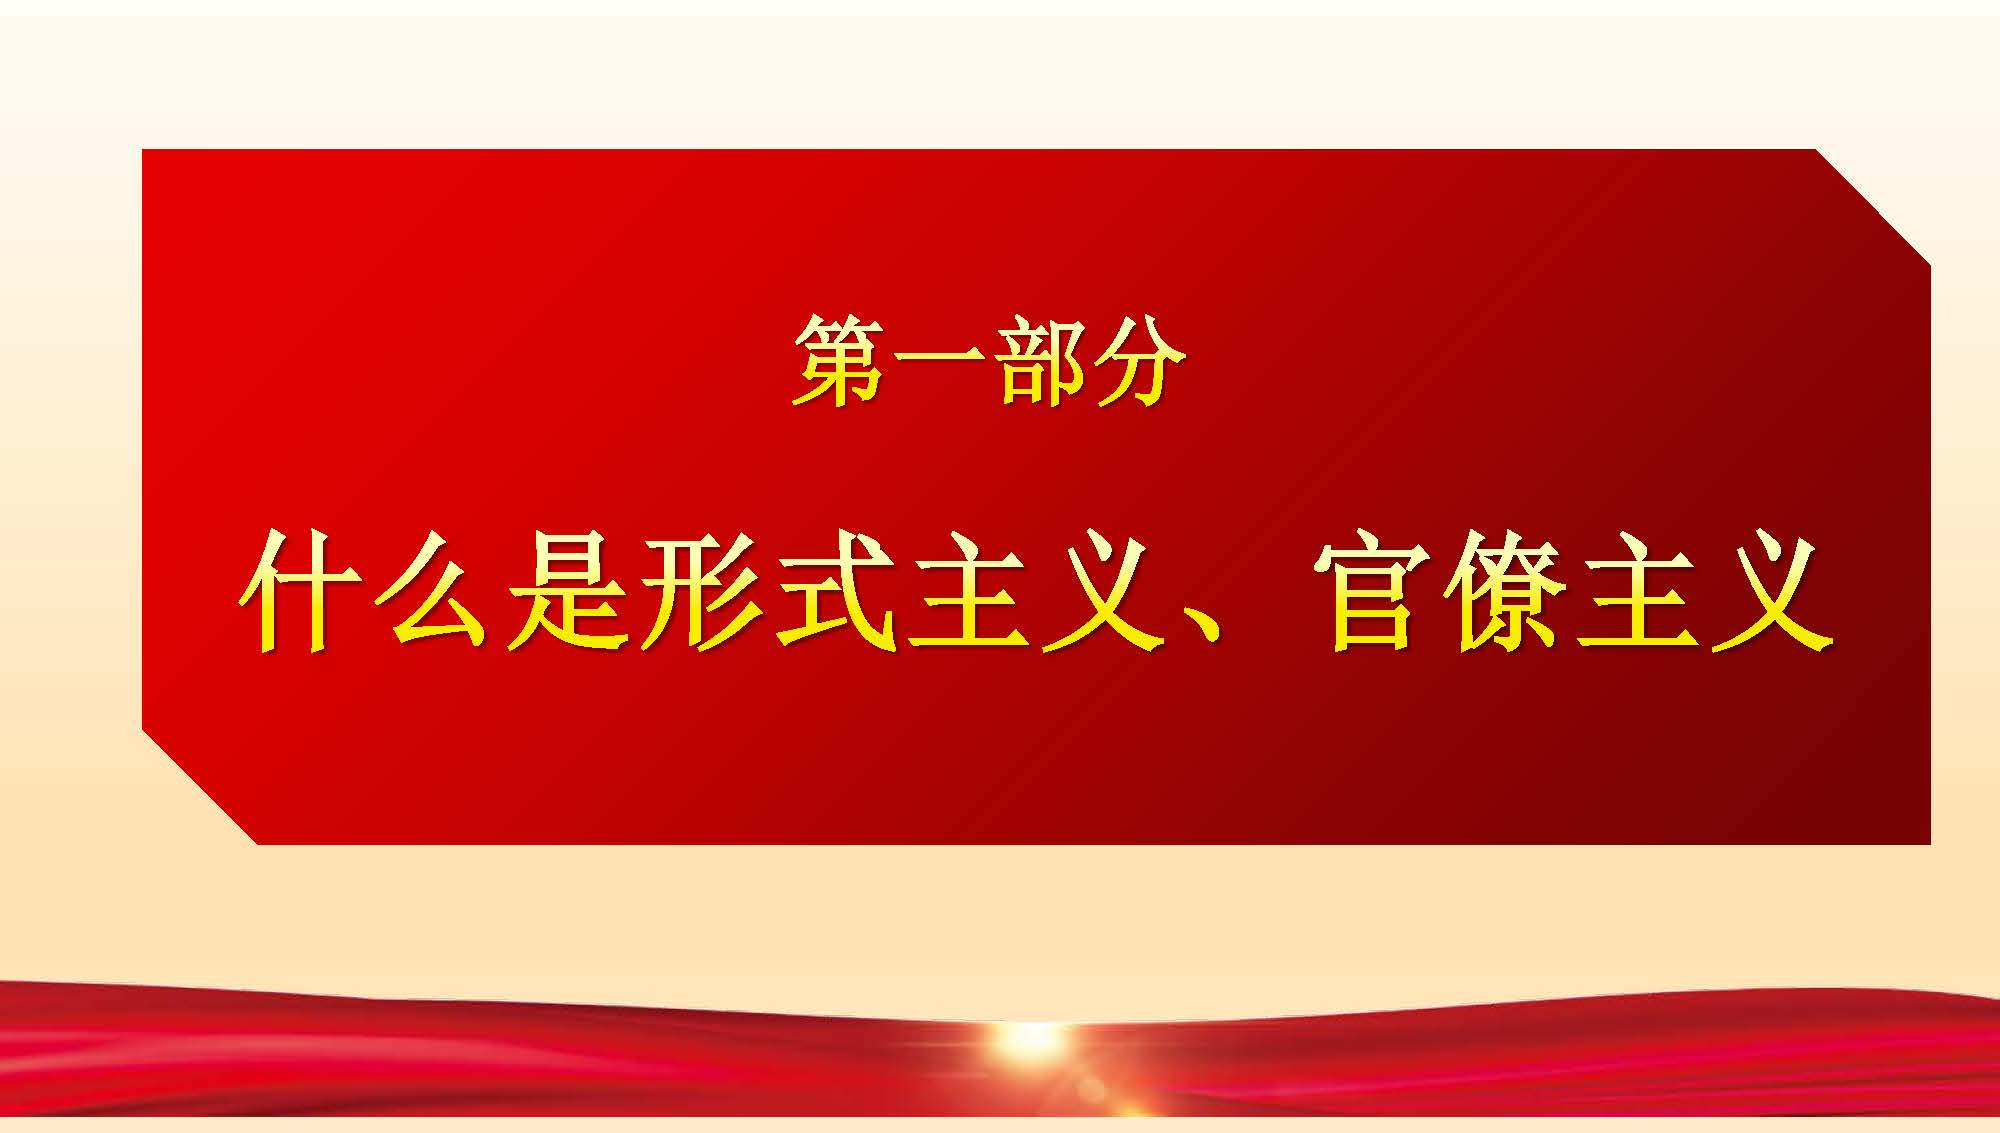 [PPT]中国水利水电第十四工程局有限公司华南事业部《作风建设永远在路上》